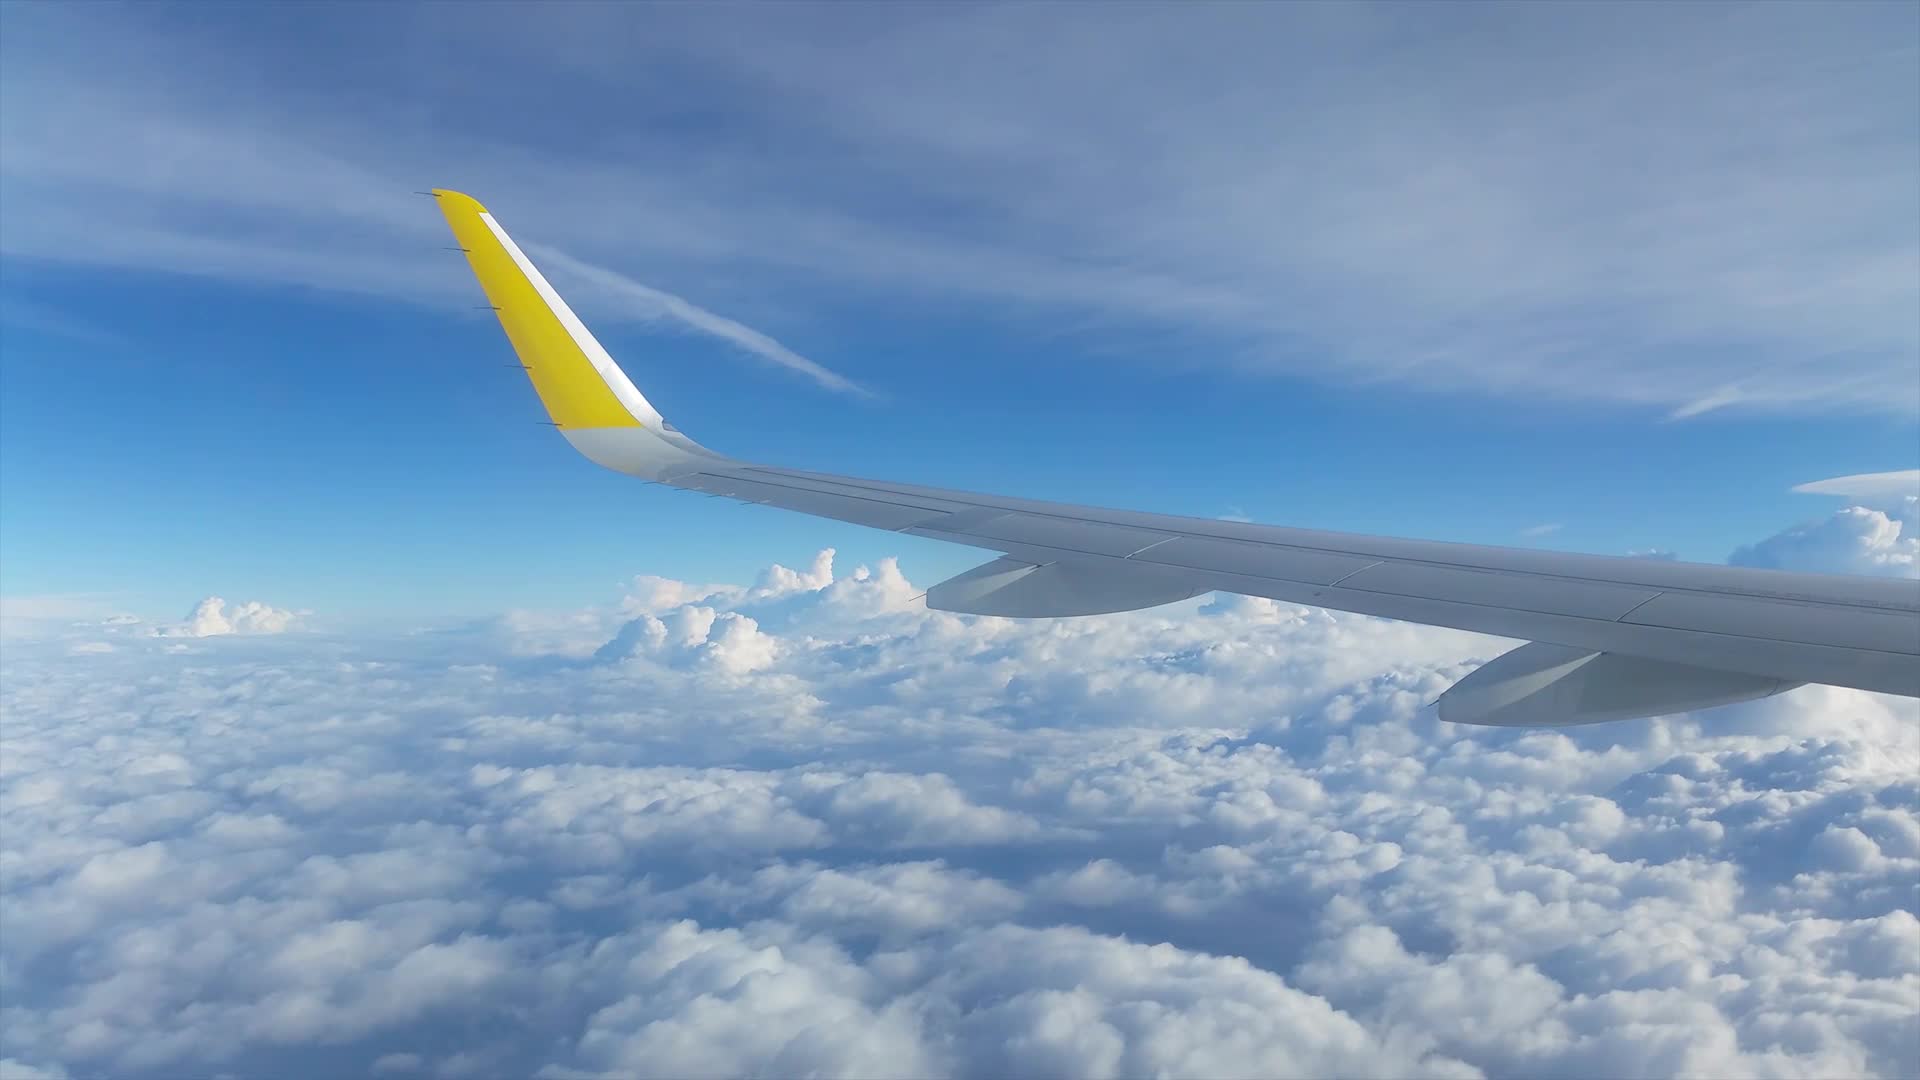 Airplane Window View